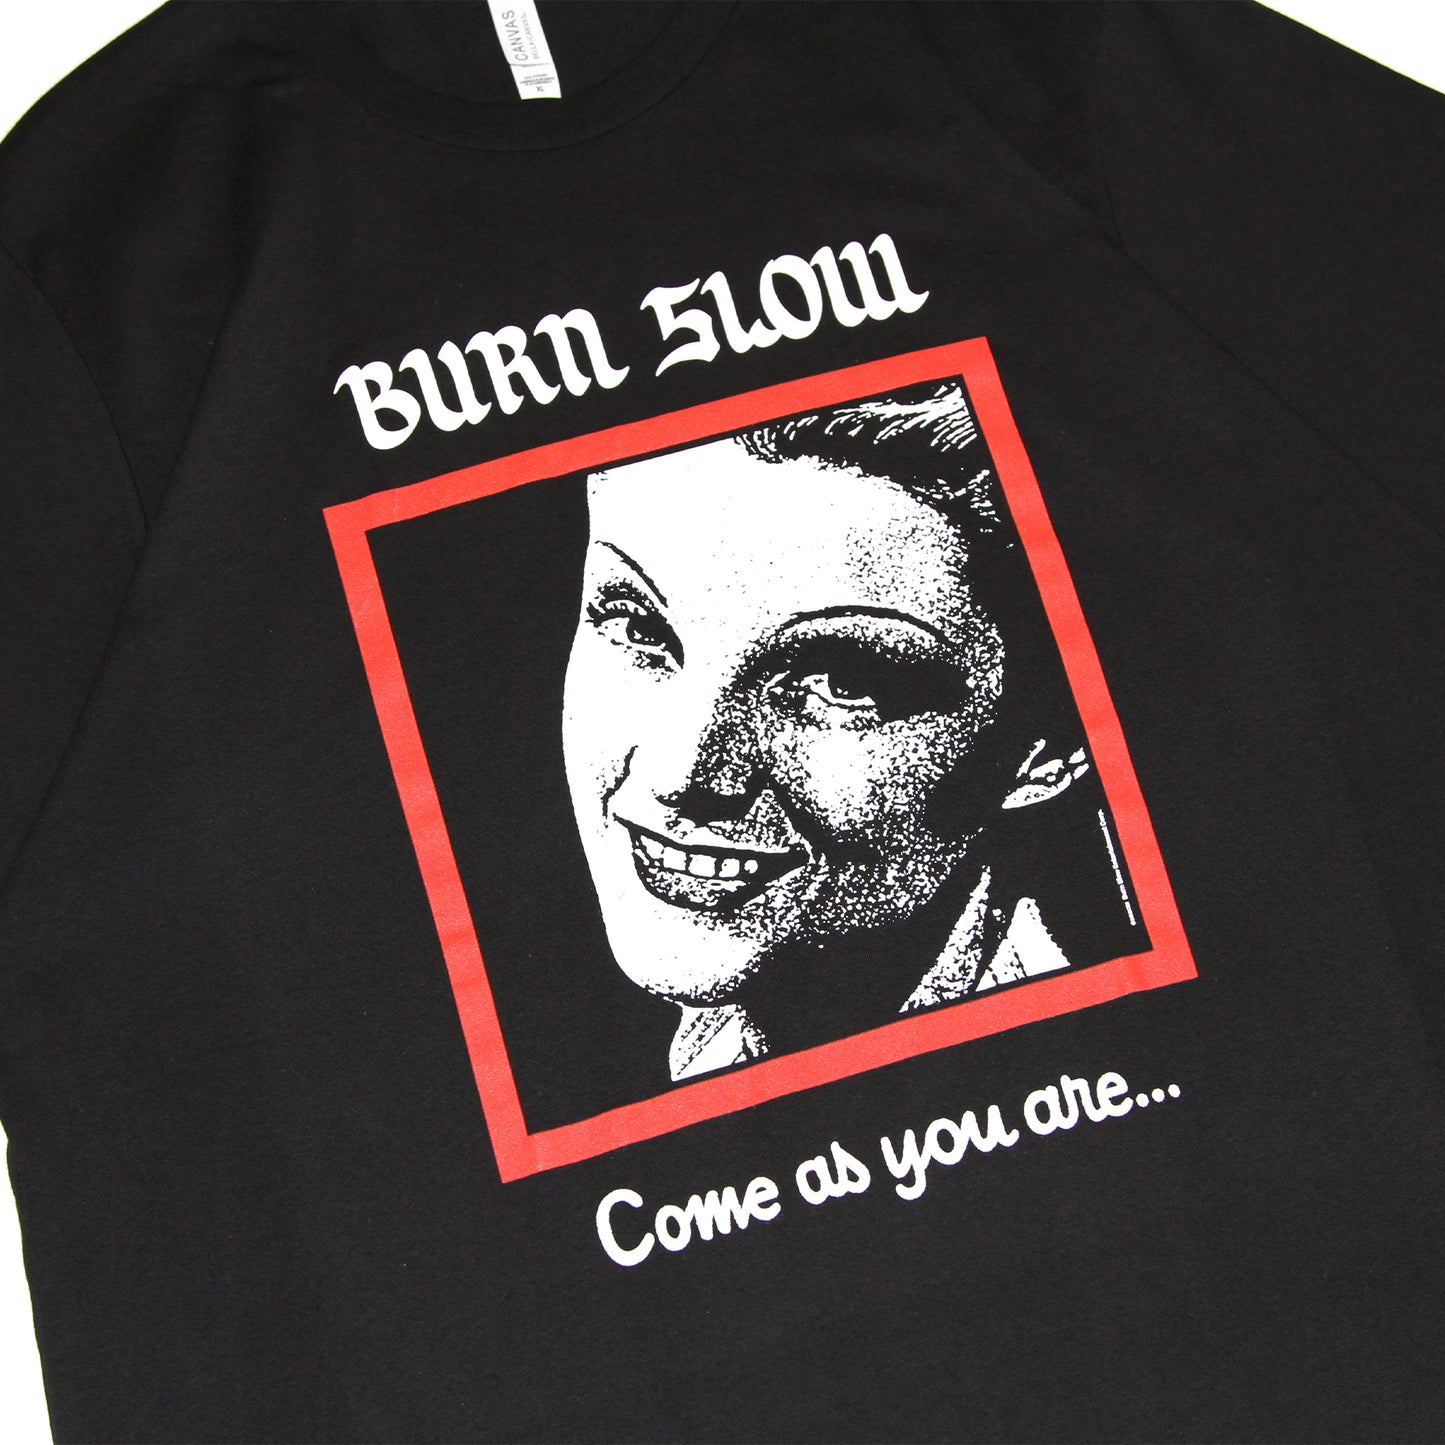 BURN SLOW - Open 24 Hours T-Shirt/Black